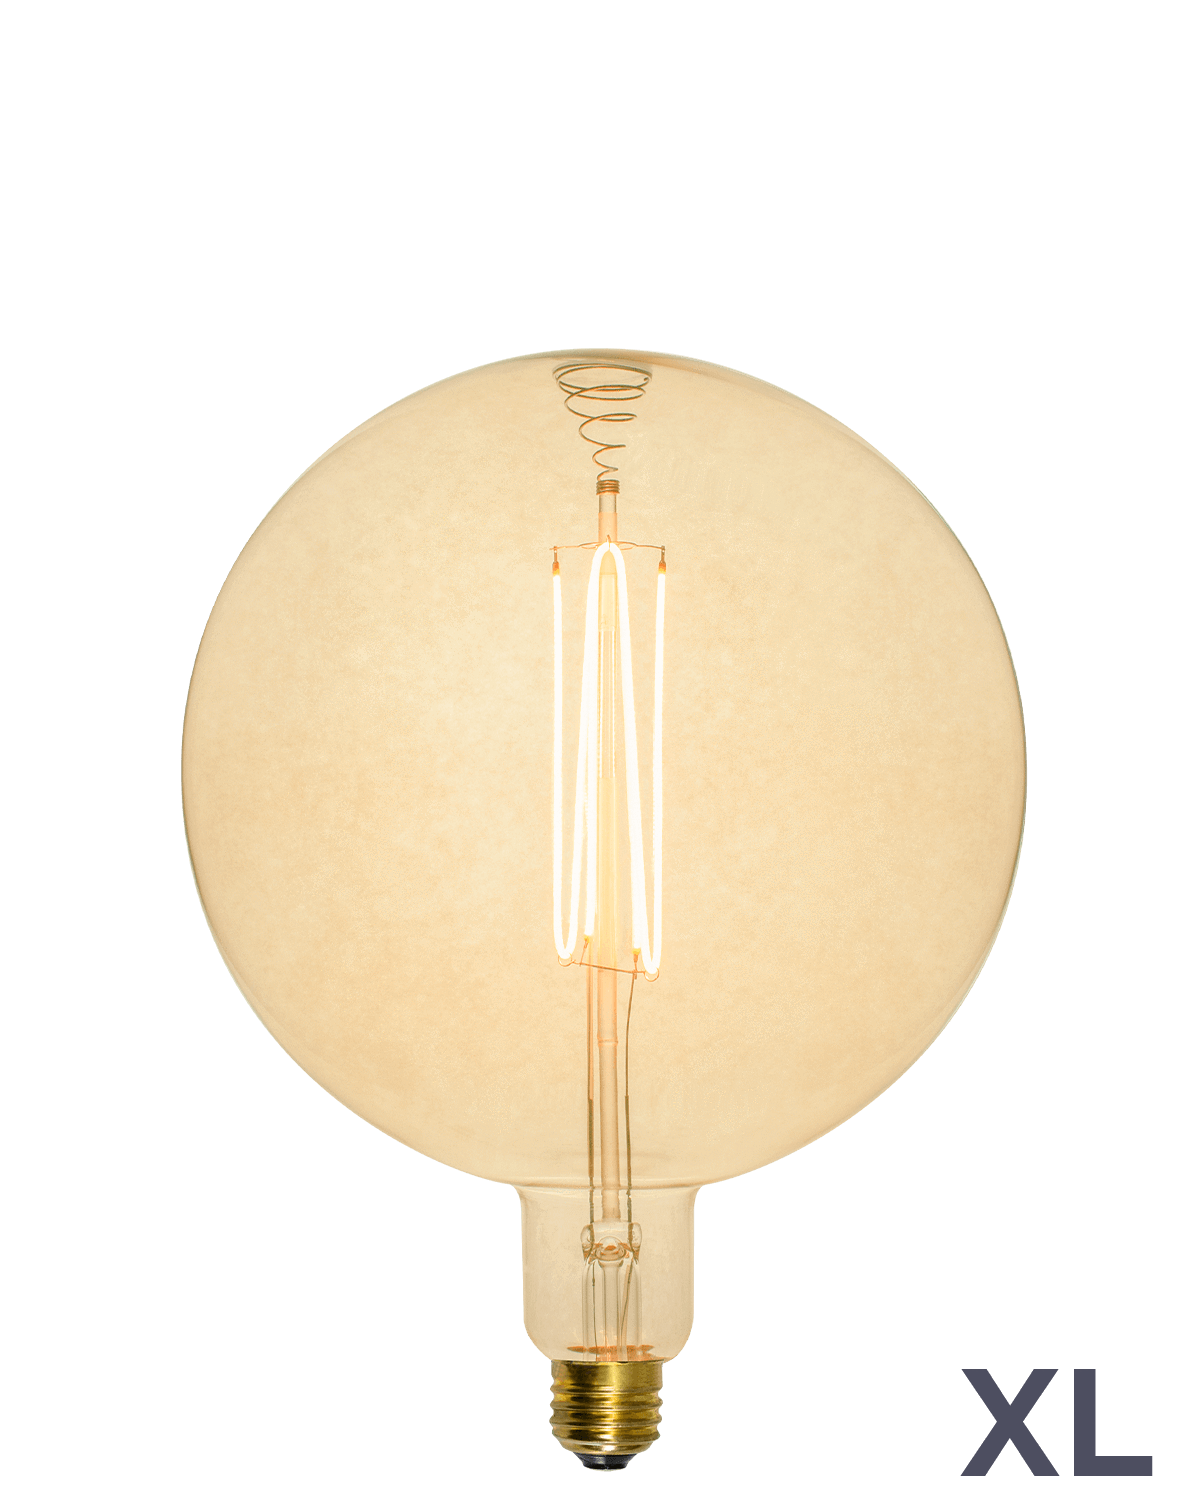 Bulb: LED XL Amber 8" Globe Hangout Lighting 